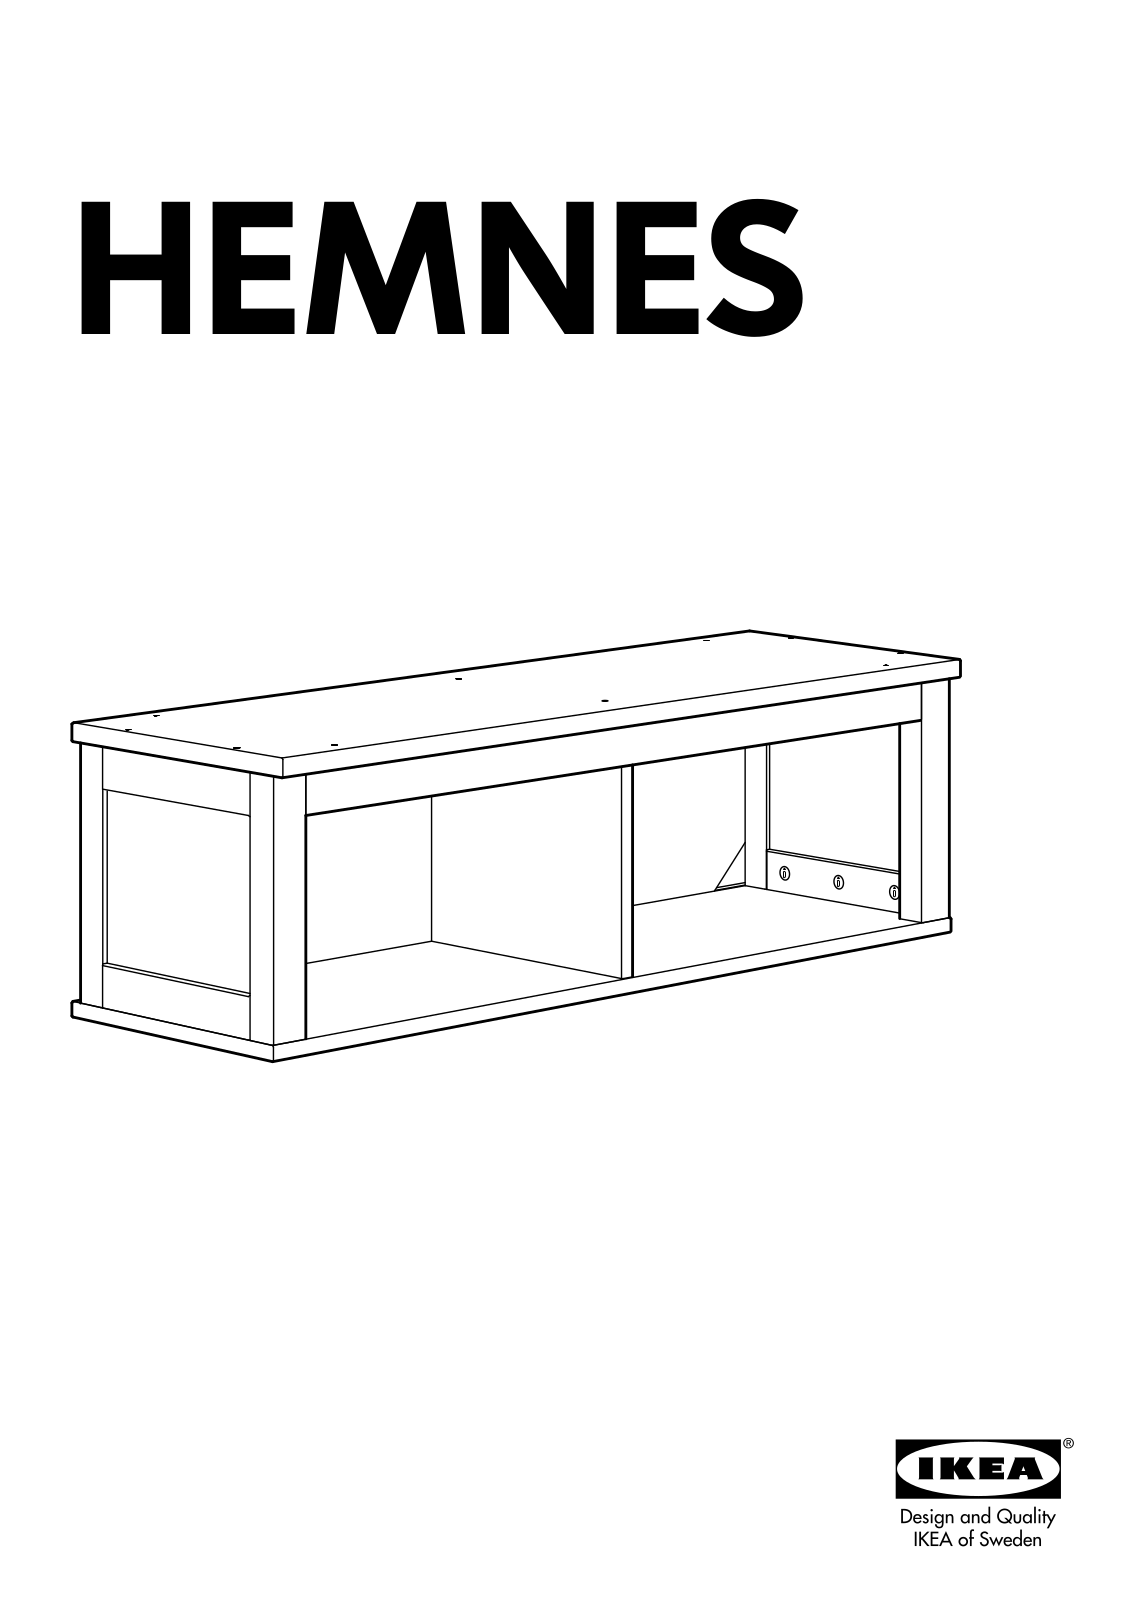 IKEA HEMNES WALL BRIDGING SHELF 43x13 User Manual